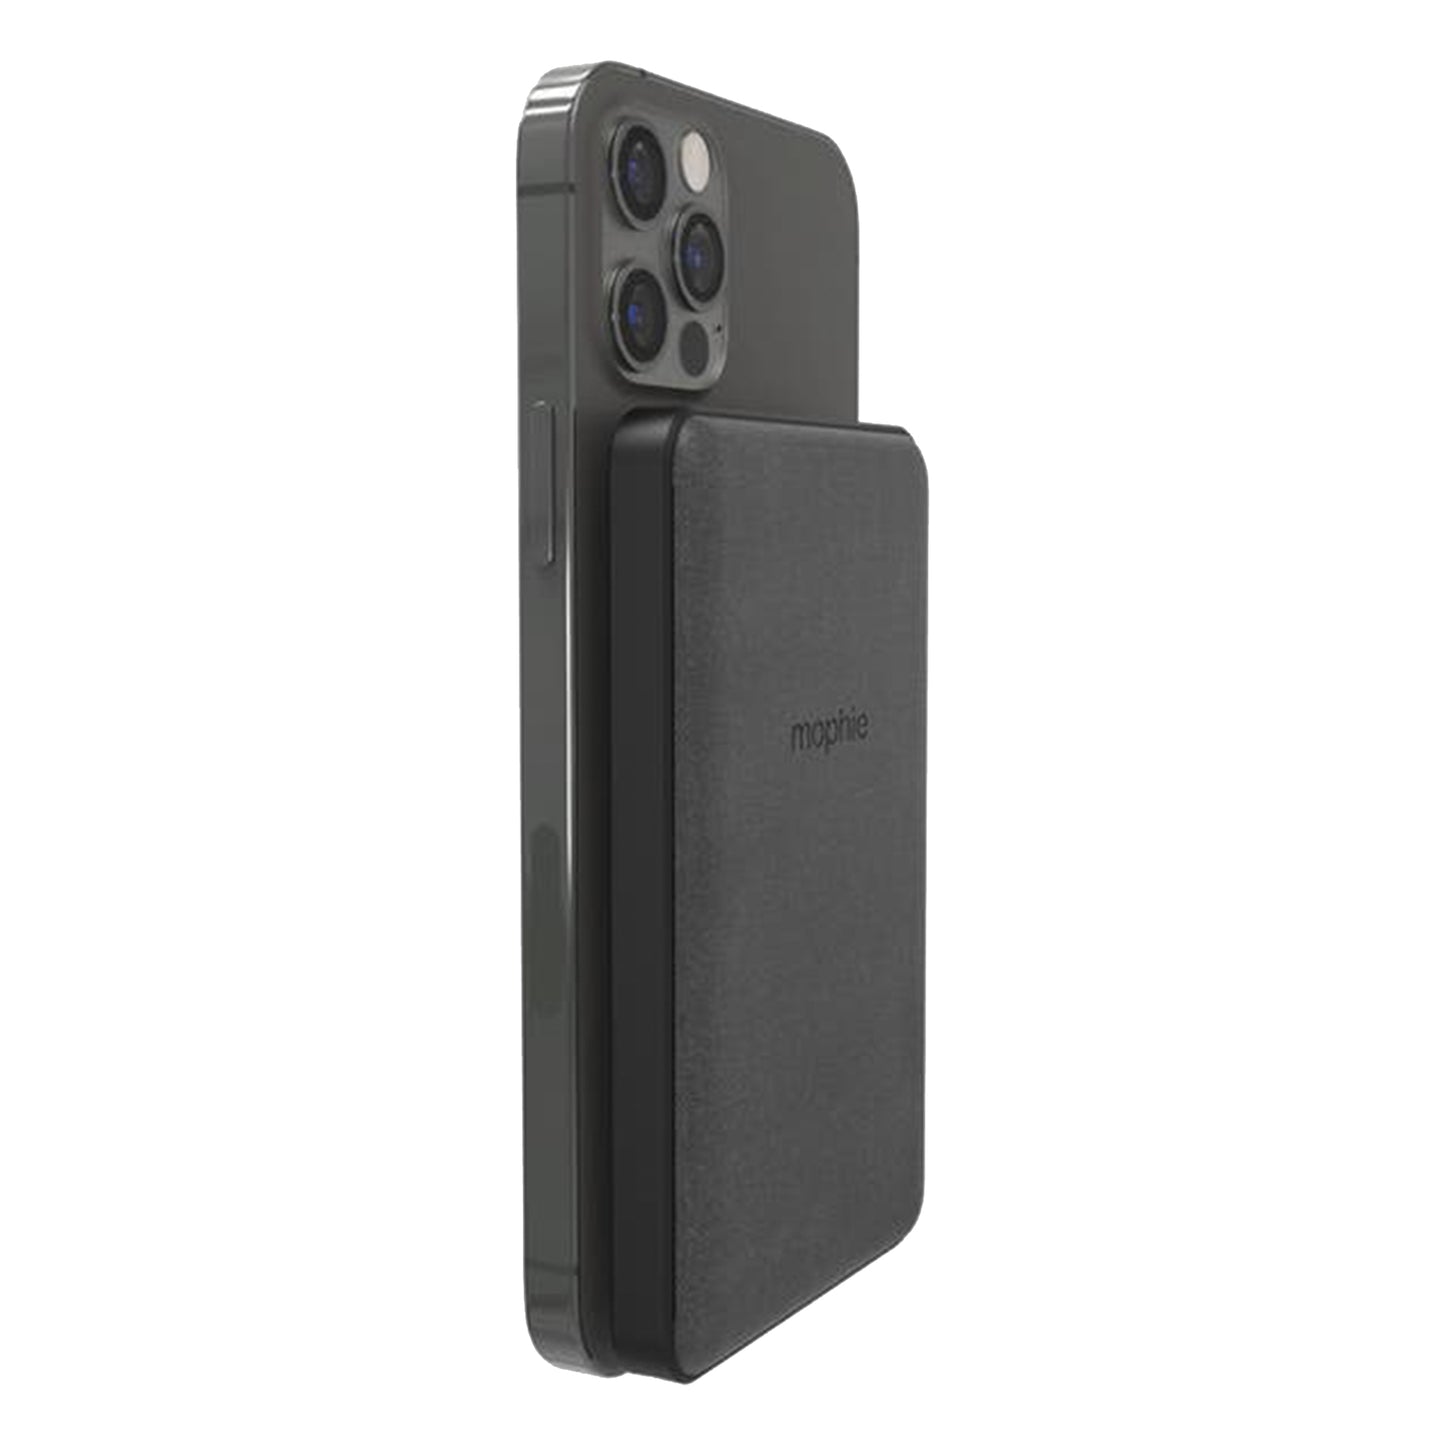 Mophie Snap+ Juice Pack Mini 5,000mAh - Powerbank Wireless Charging - Black (Barcode: 840056143050 )